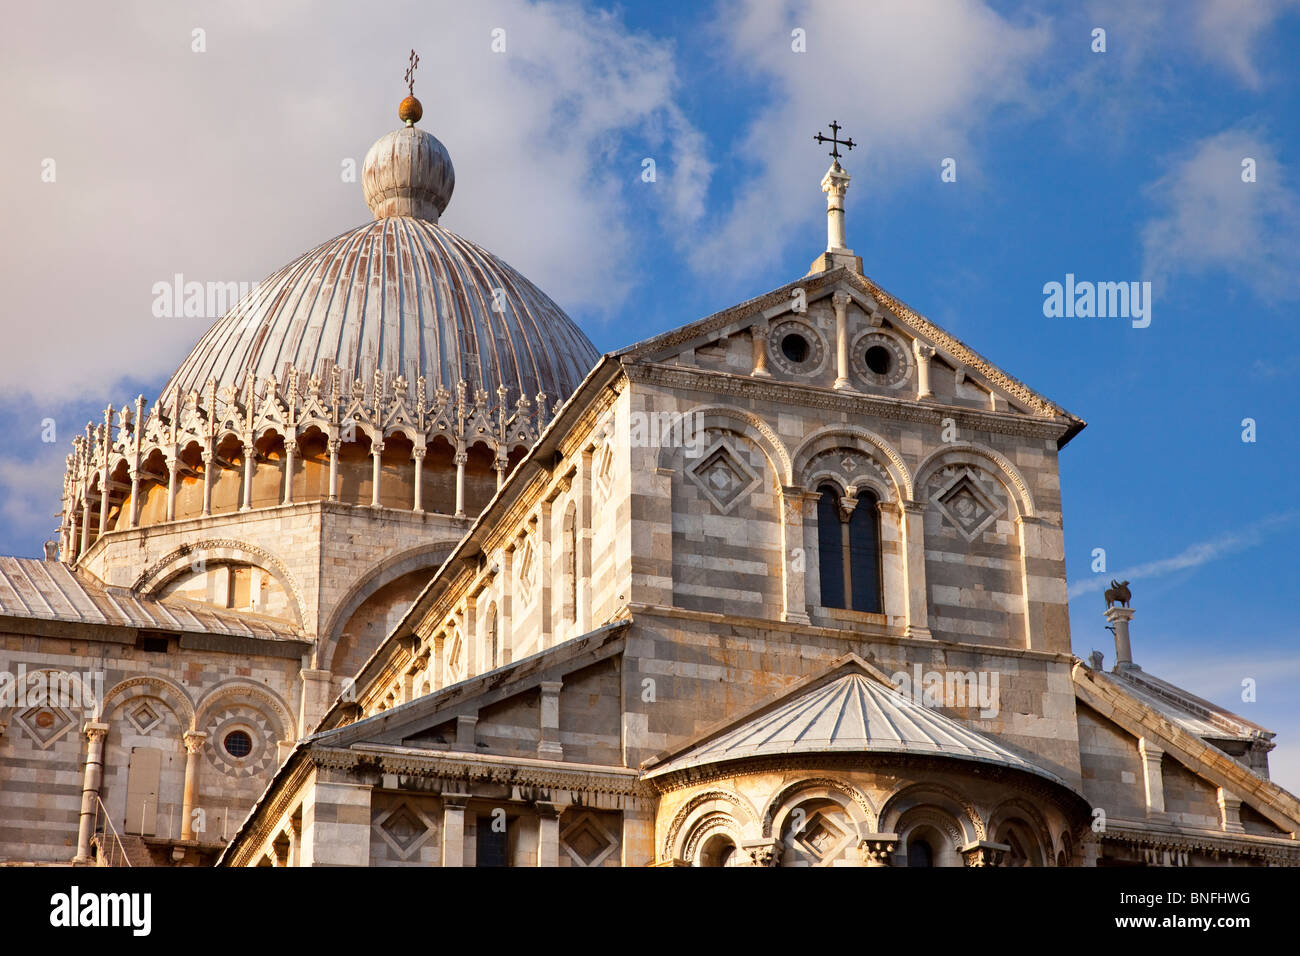 The Duomo - Santa Maria Assunta at the Leaning Tower in Pisa, Tuscany Italy Stock Photo